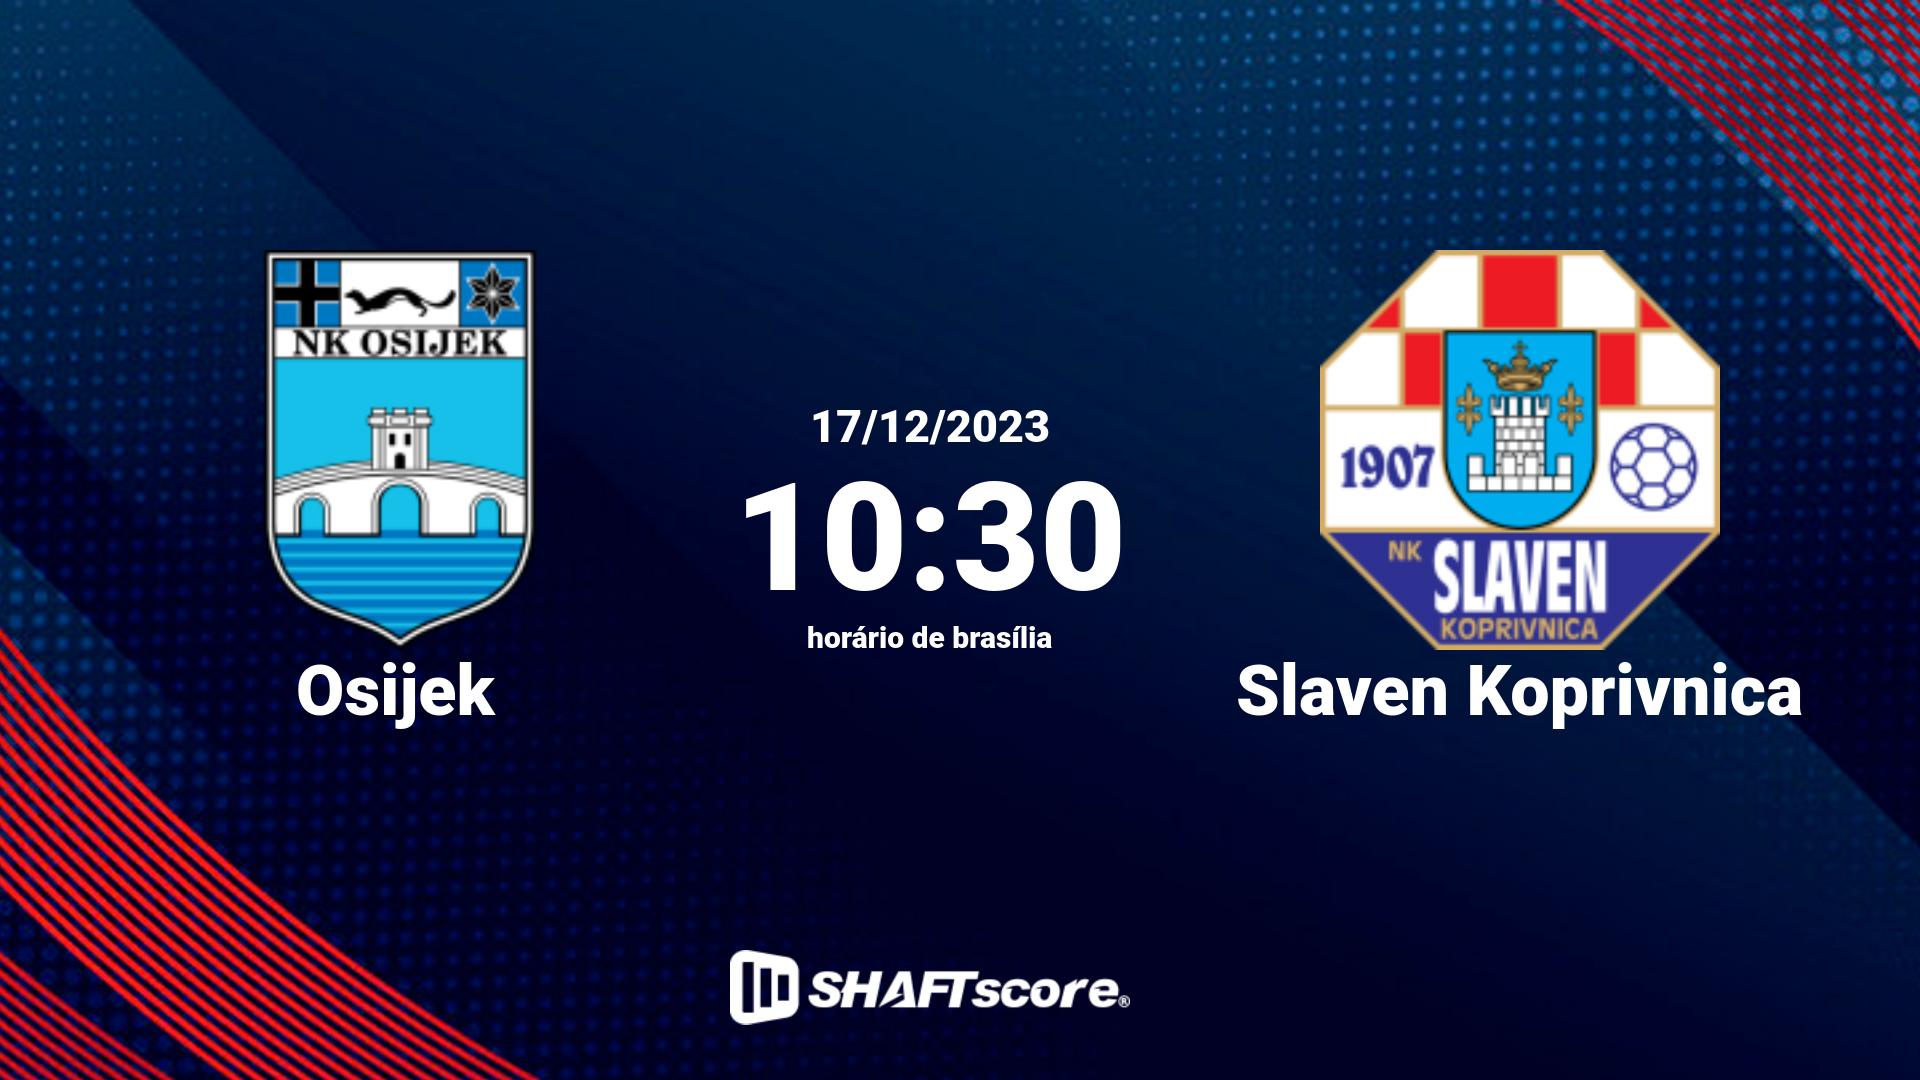 Estatísticas do jogo Osijek vs Slaven Koprivnica 17.12 10:30